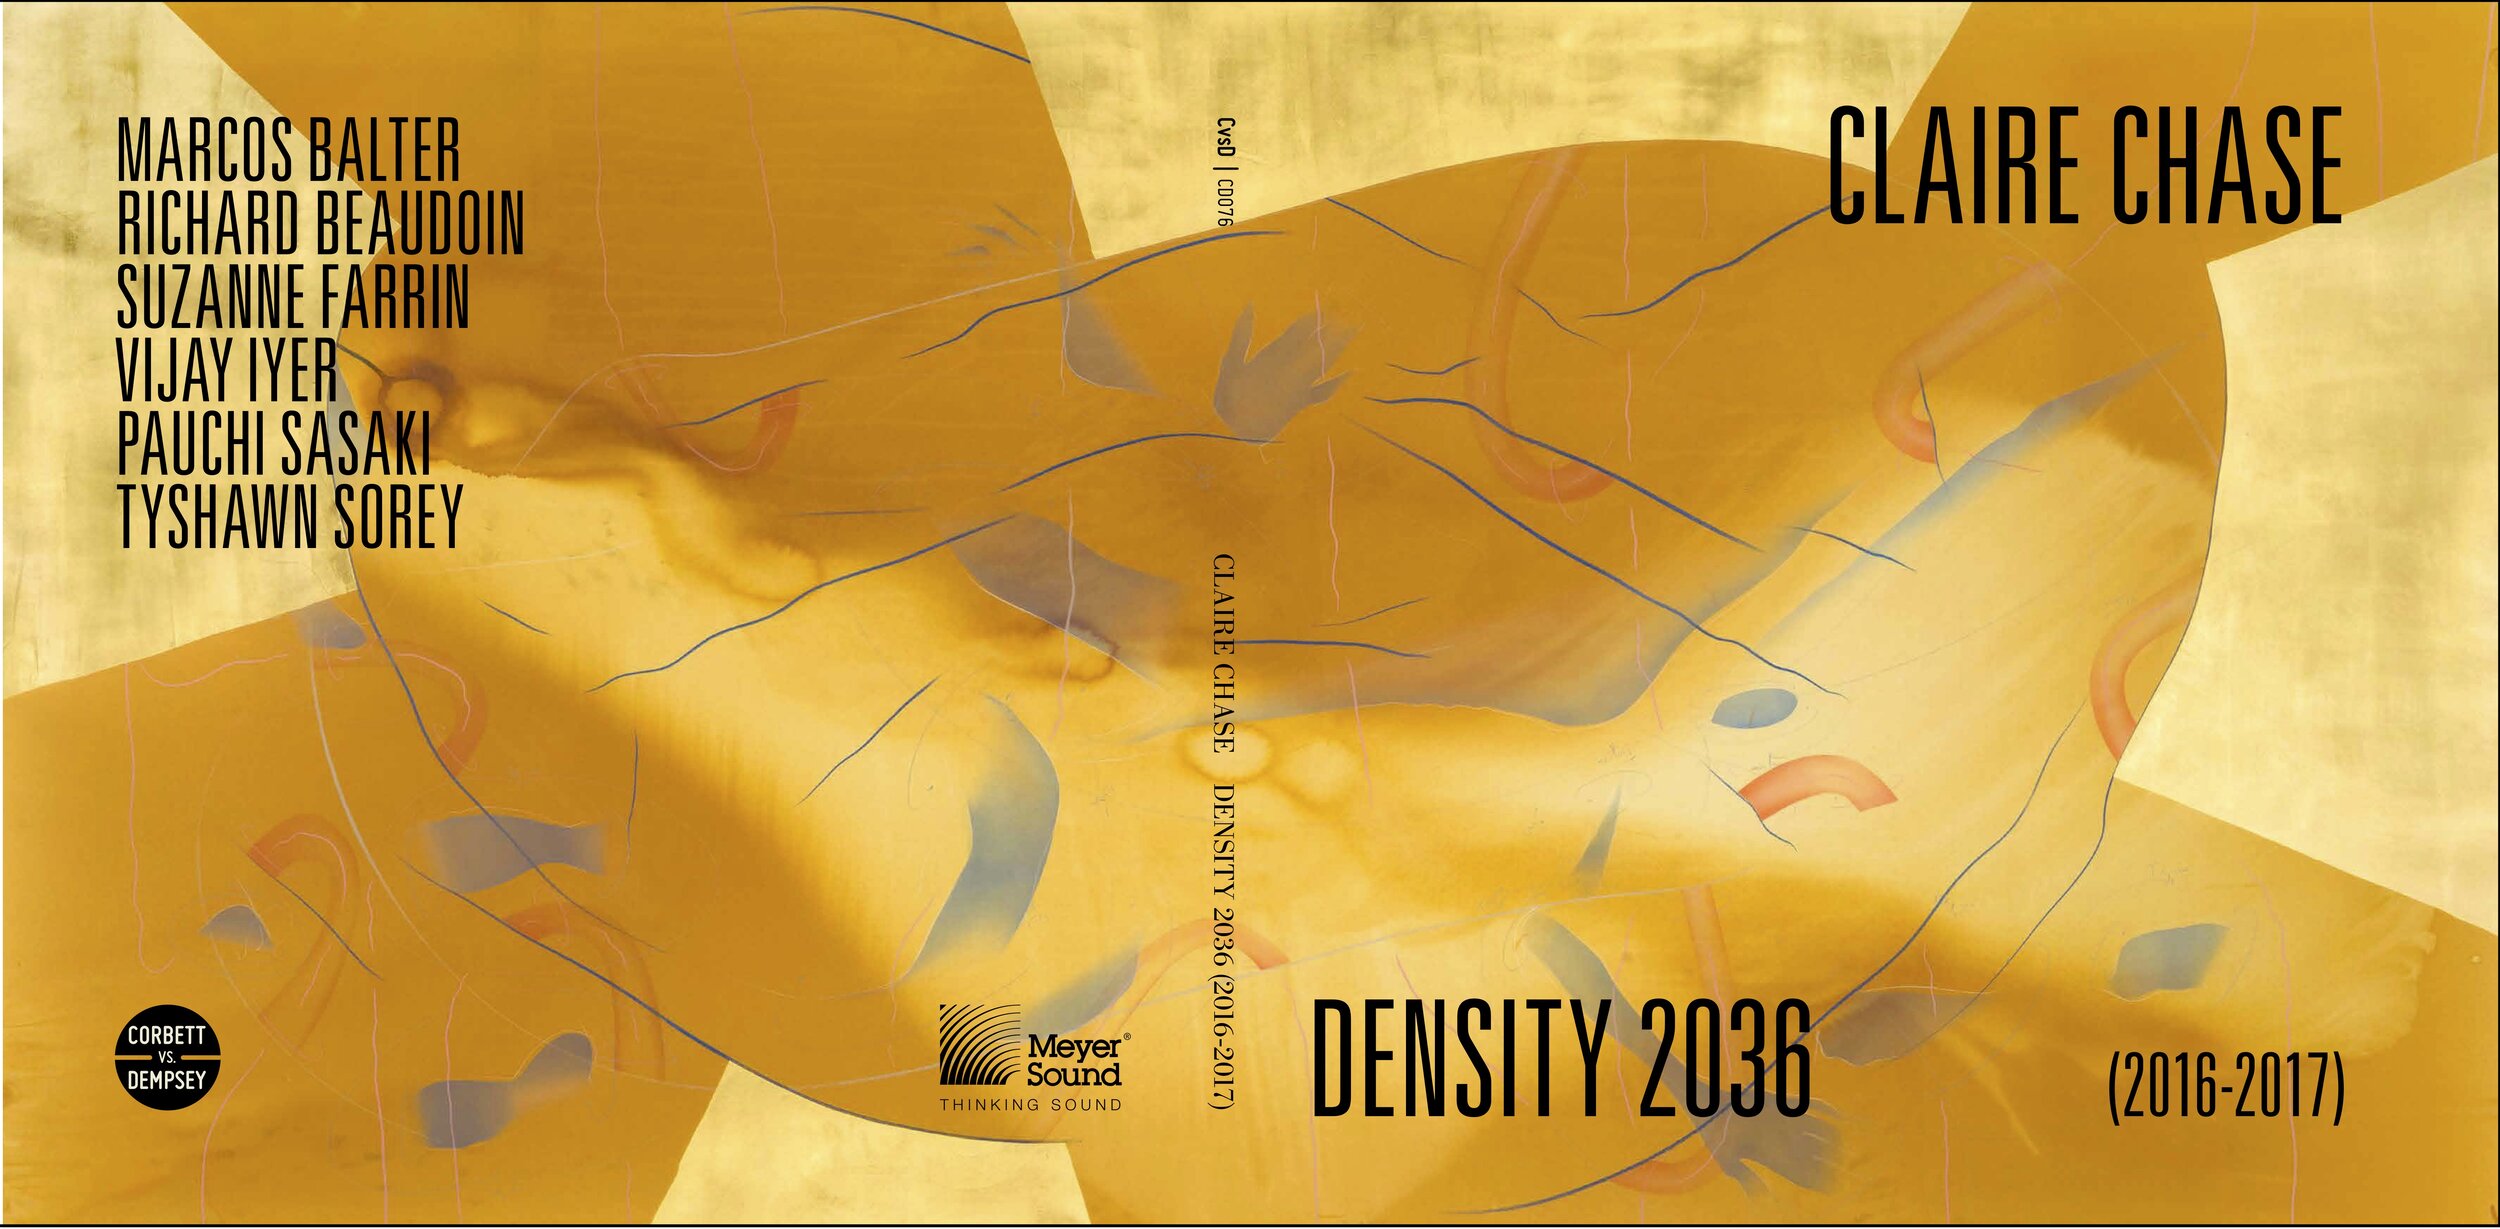 CHASE Density 2036 part iv COVERS.jpg